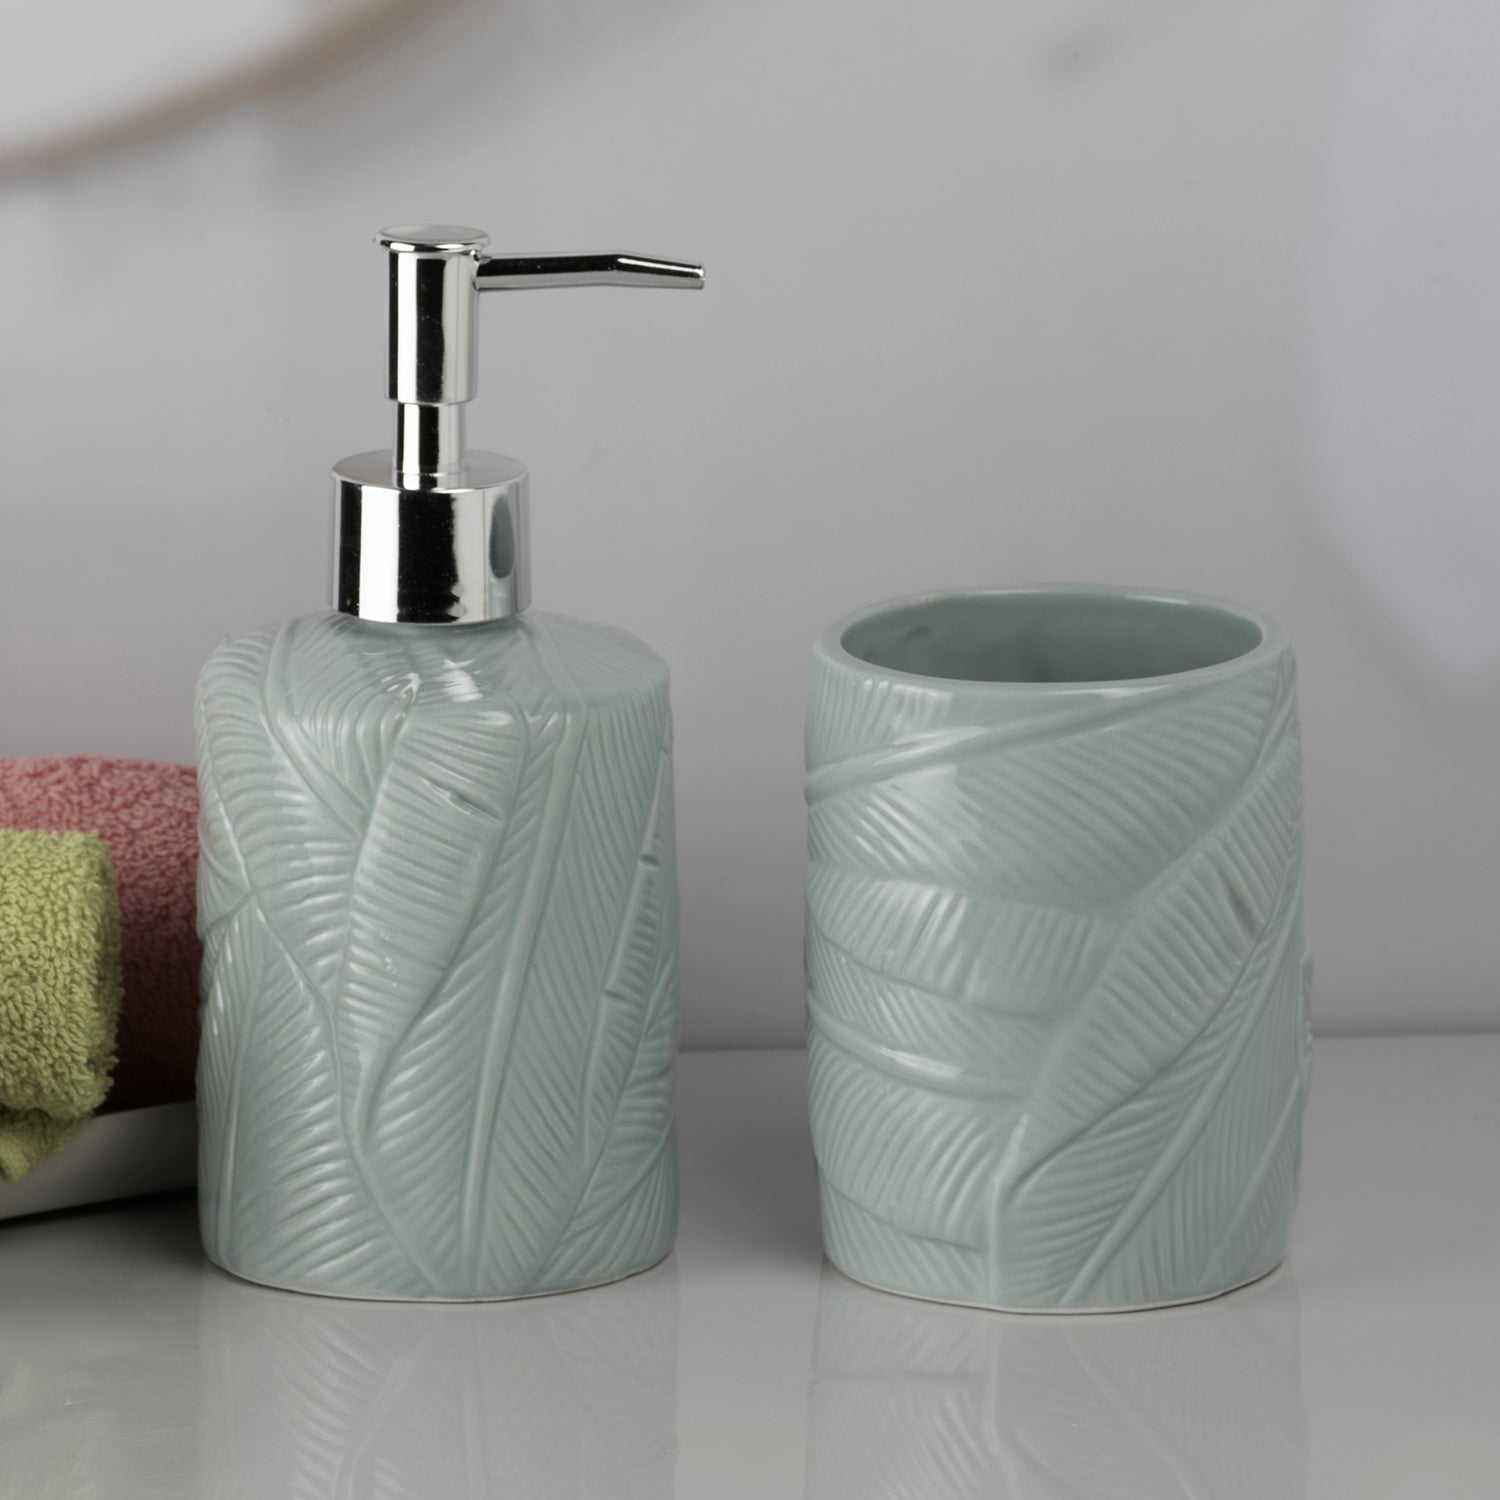 Ceramic Bathroom Accessories Set of 2 Bath Set with Soap Dispenser (9721)